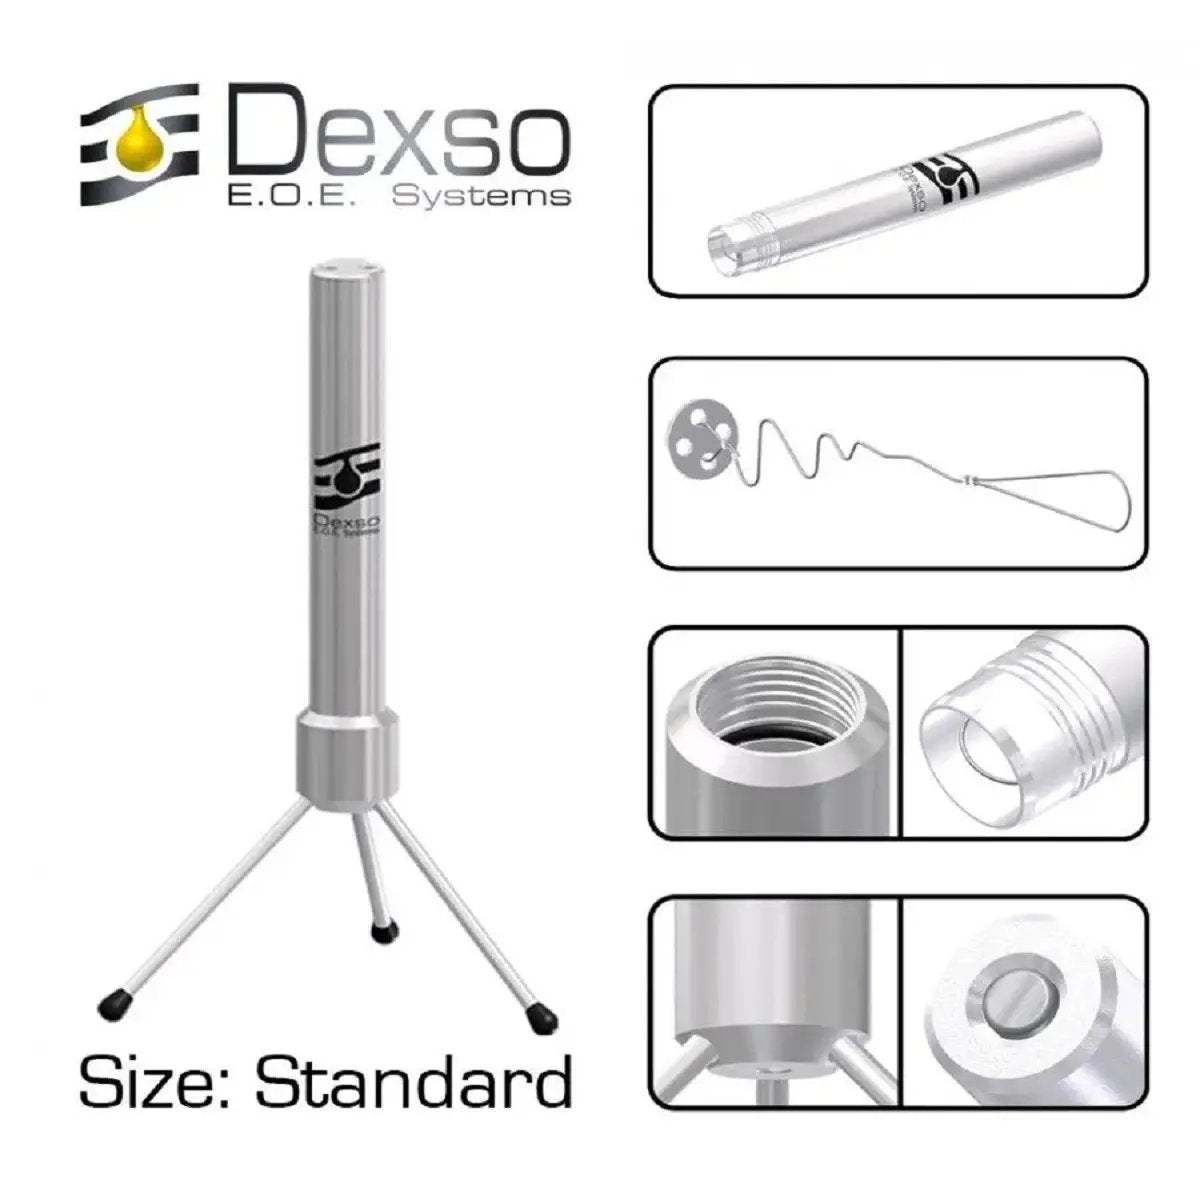 Dexso EOE – Standard Extraktor